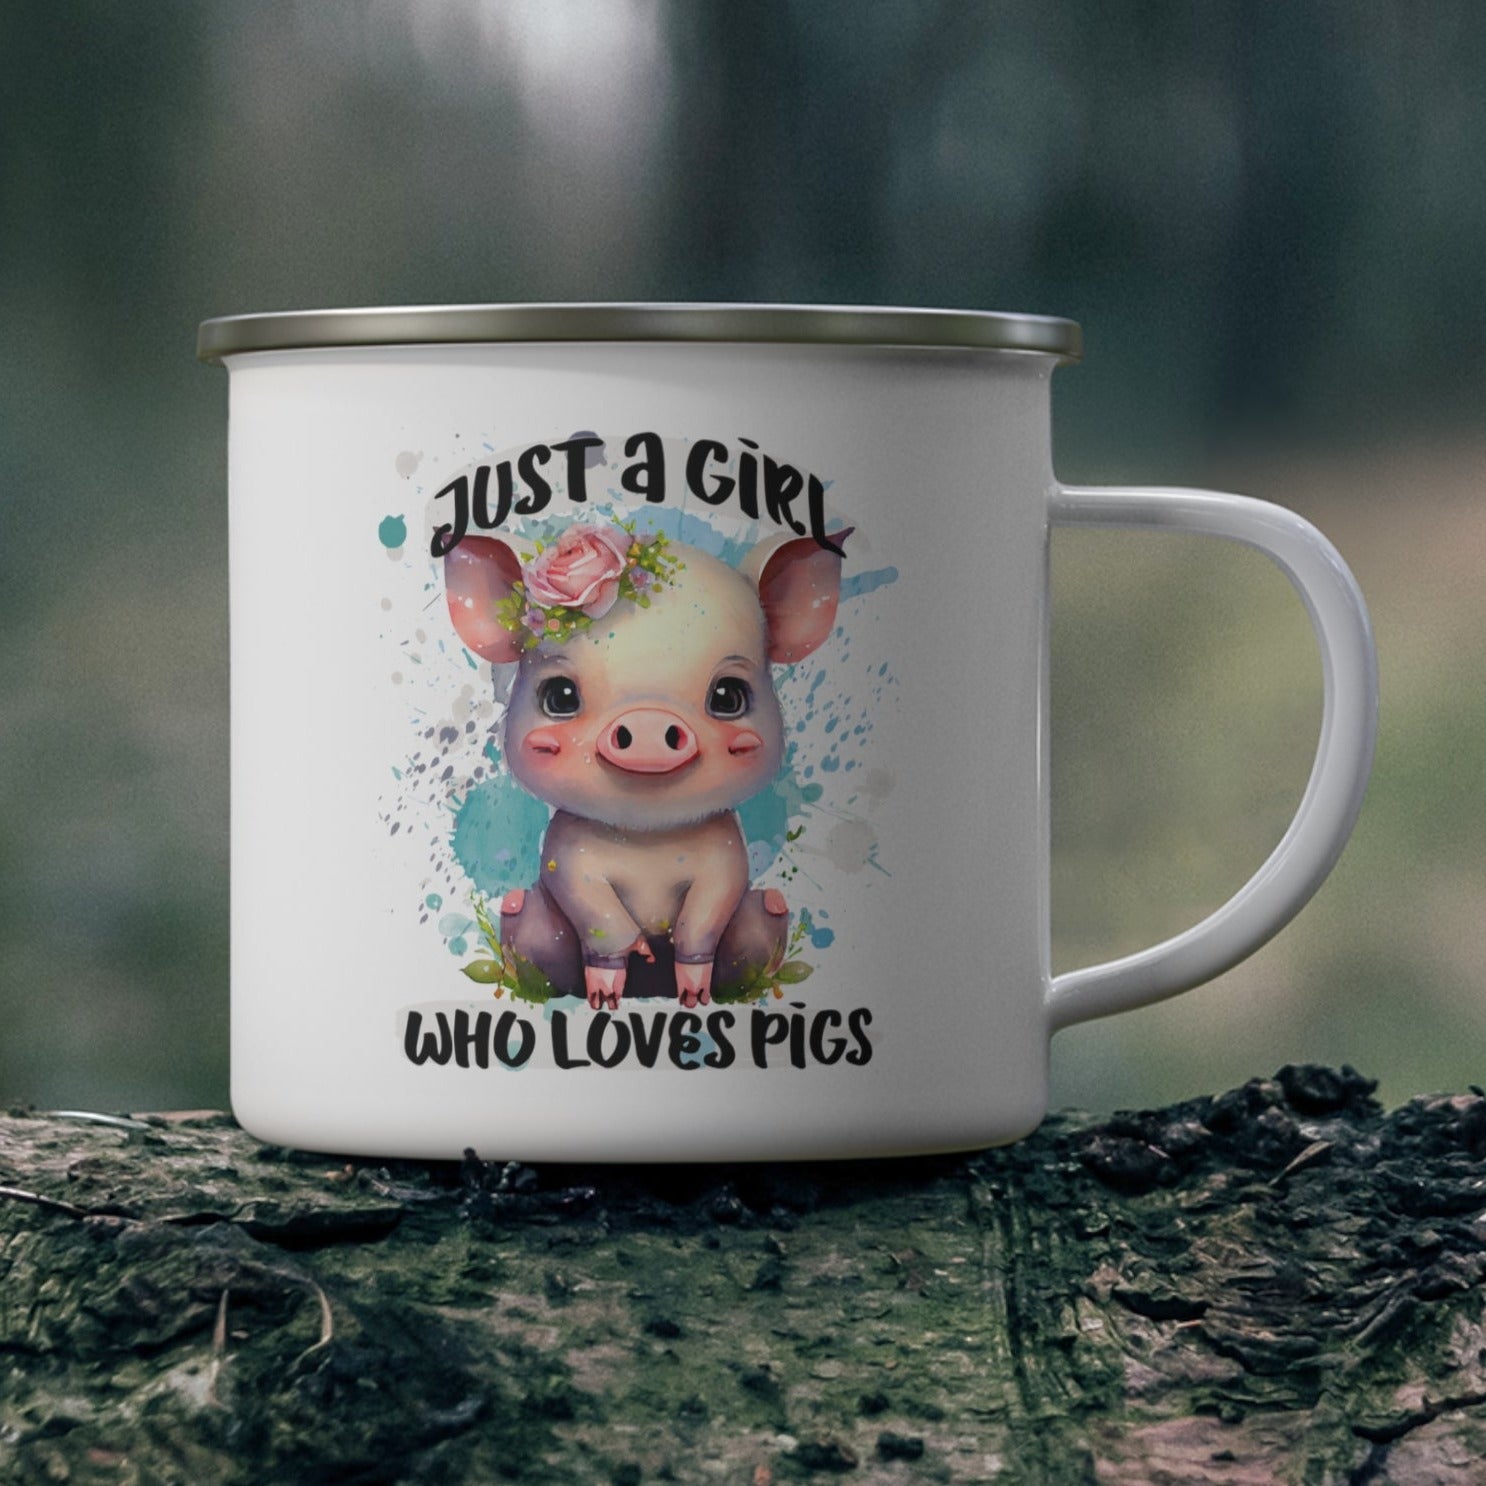 I'm Just A Girl That Loves Pigs 12oz Enamel Mug - Cute Pig Lover Cup